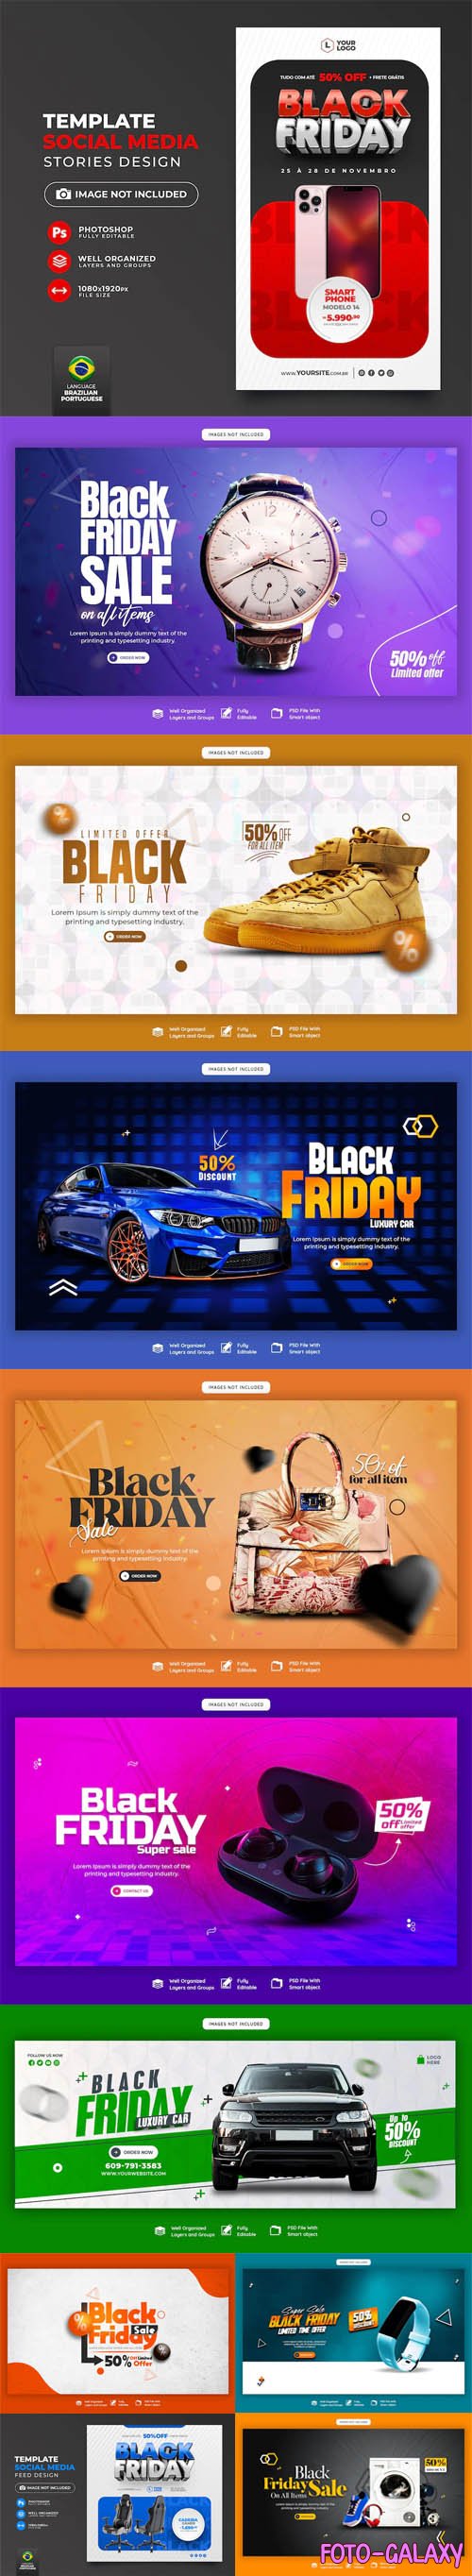 Black Friday Super Sales - 10+ Modern Web Banners PSD Templates [Vol.1]